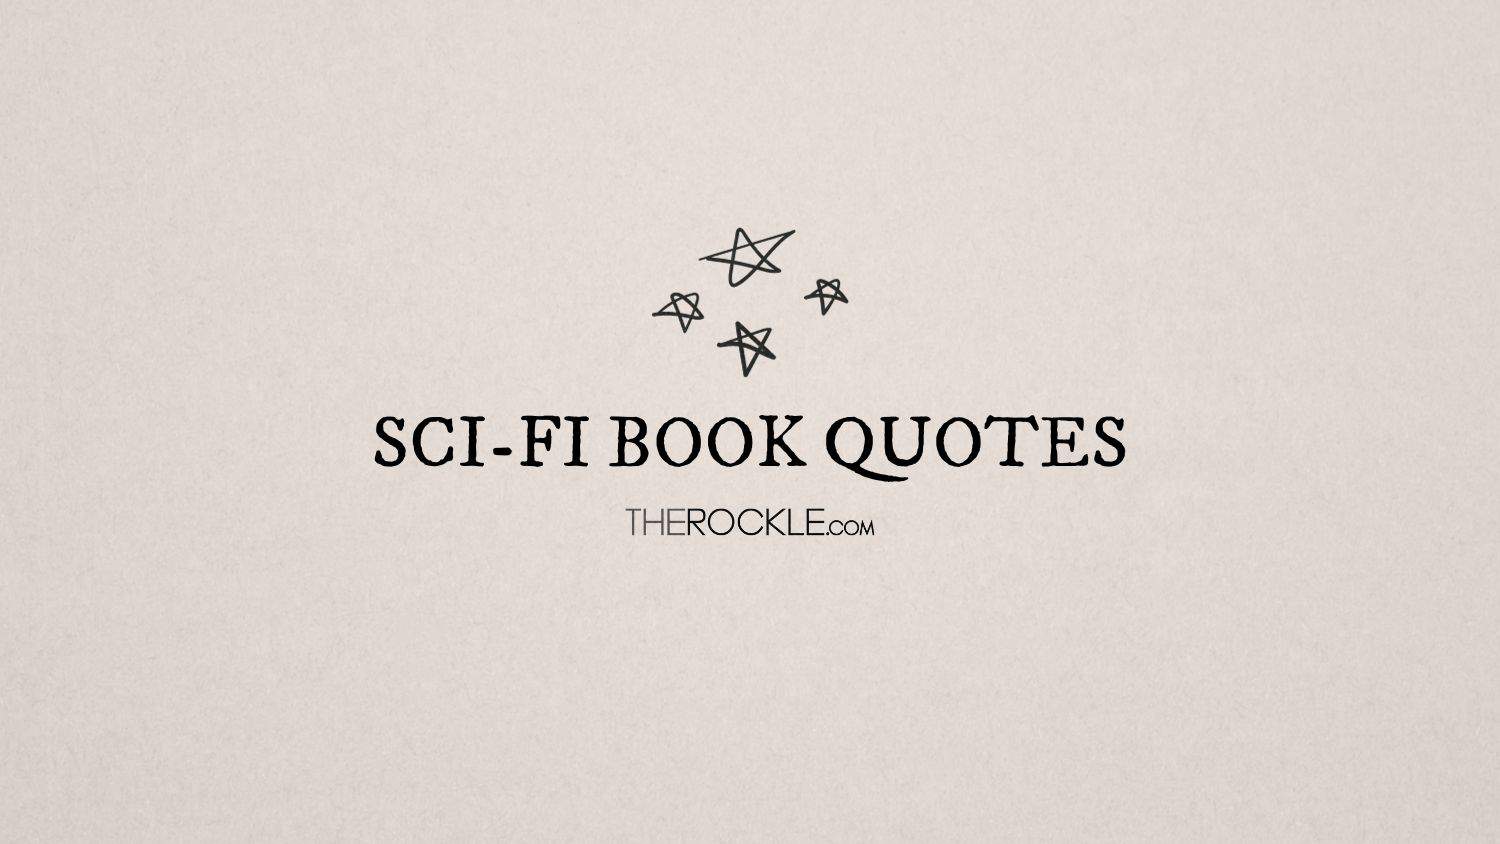 Sci-fi book quotes